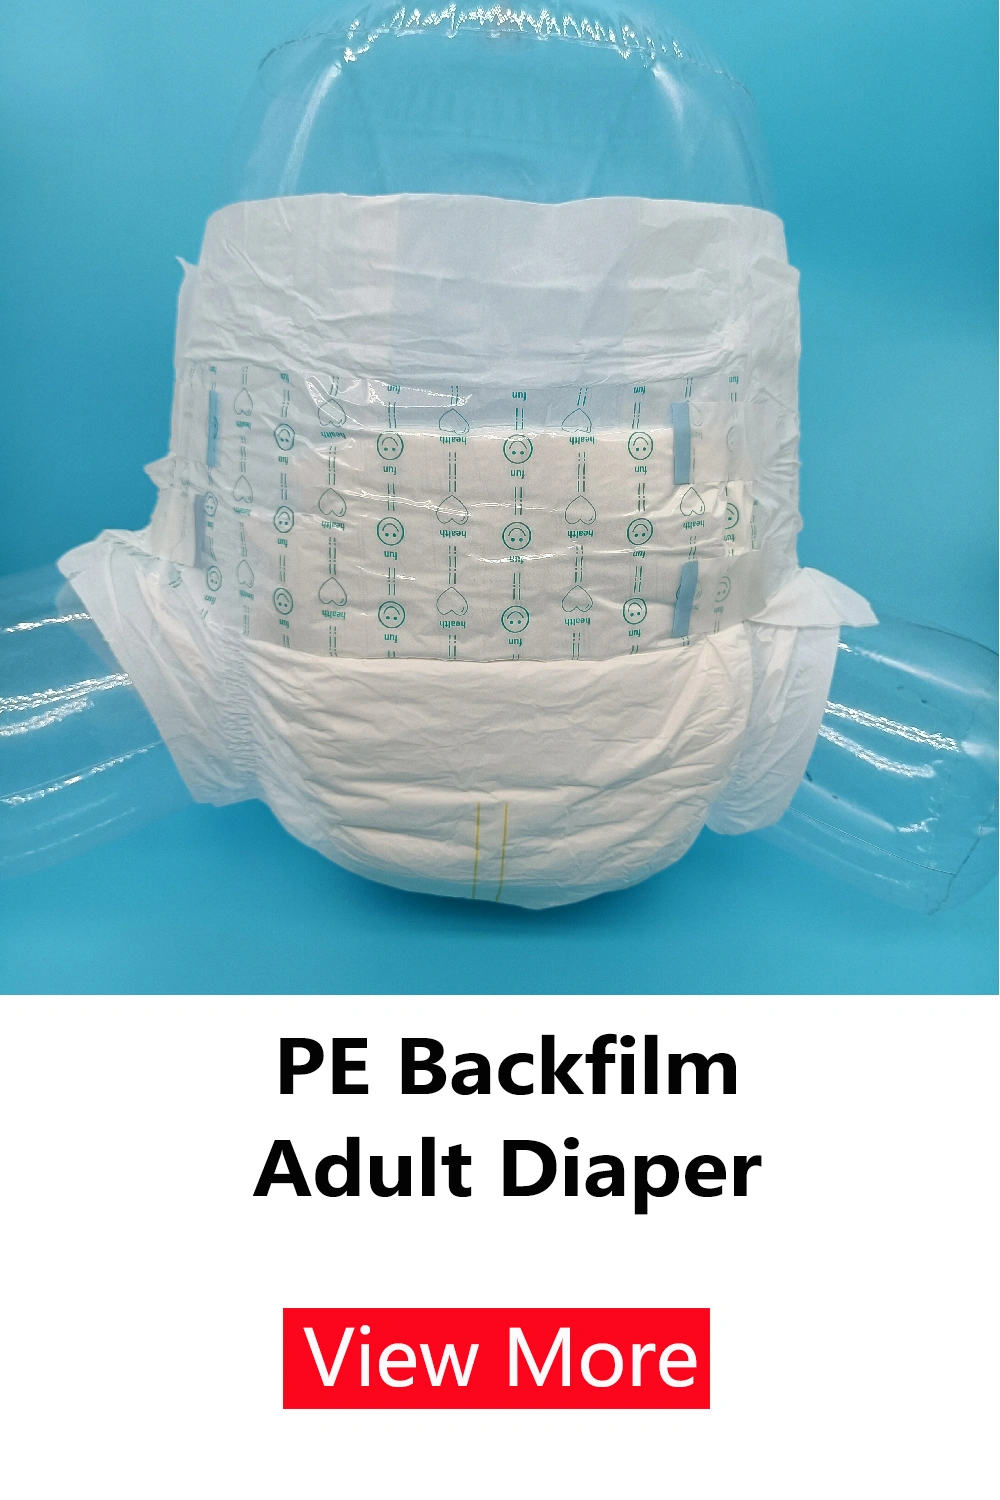 Adult Diaper pe backfilm adult diaper